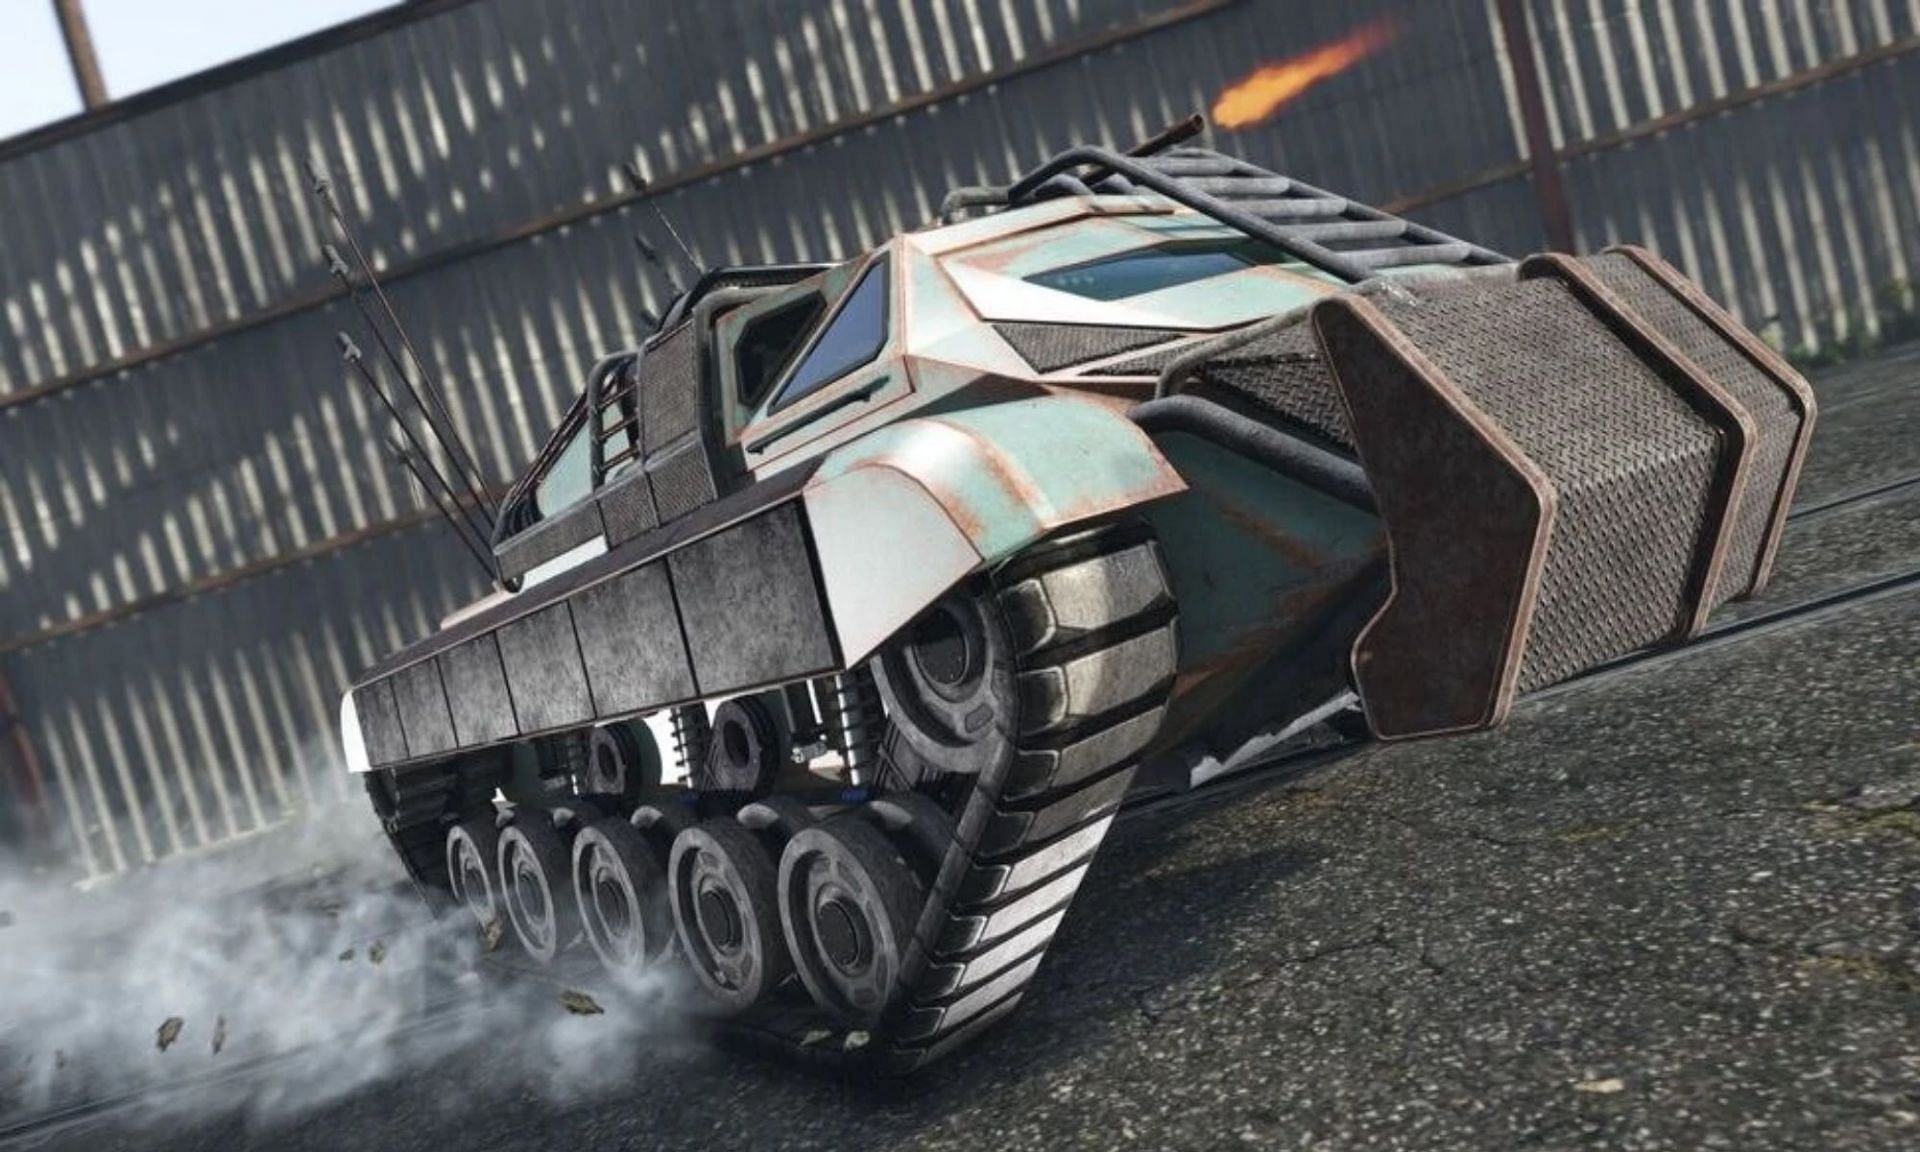 The Apocalypse Scarab is a very speedy tank (Image via Rockstar Games)